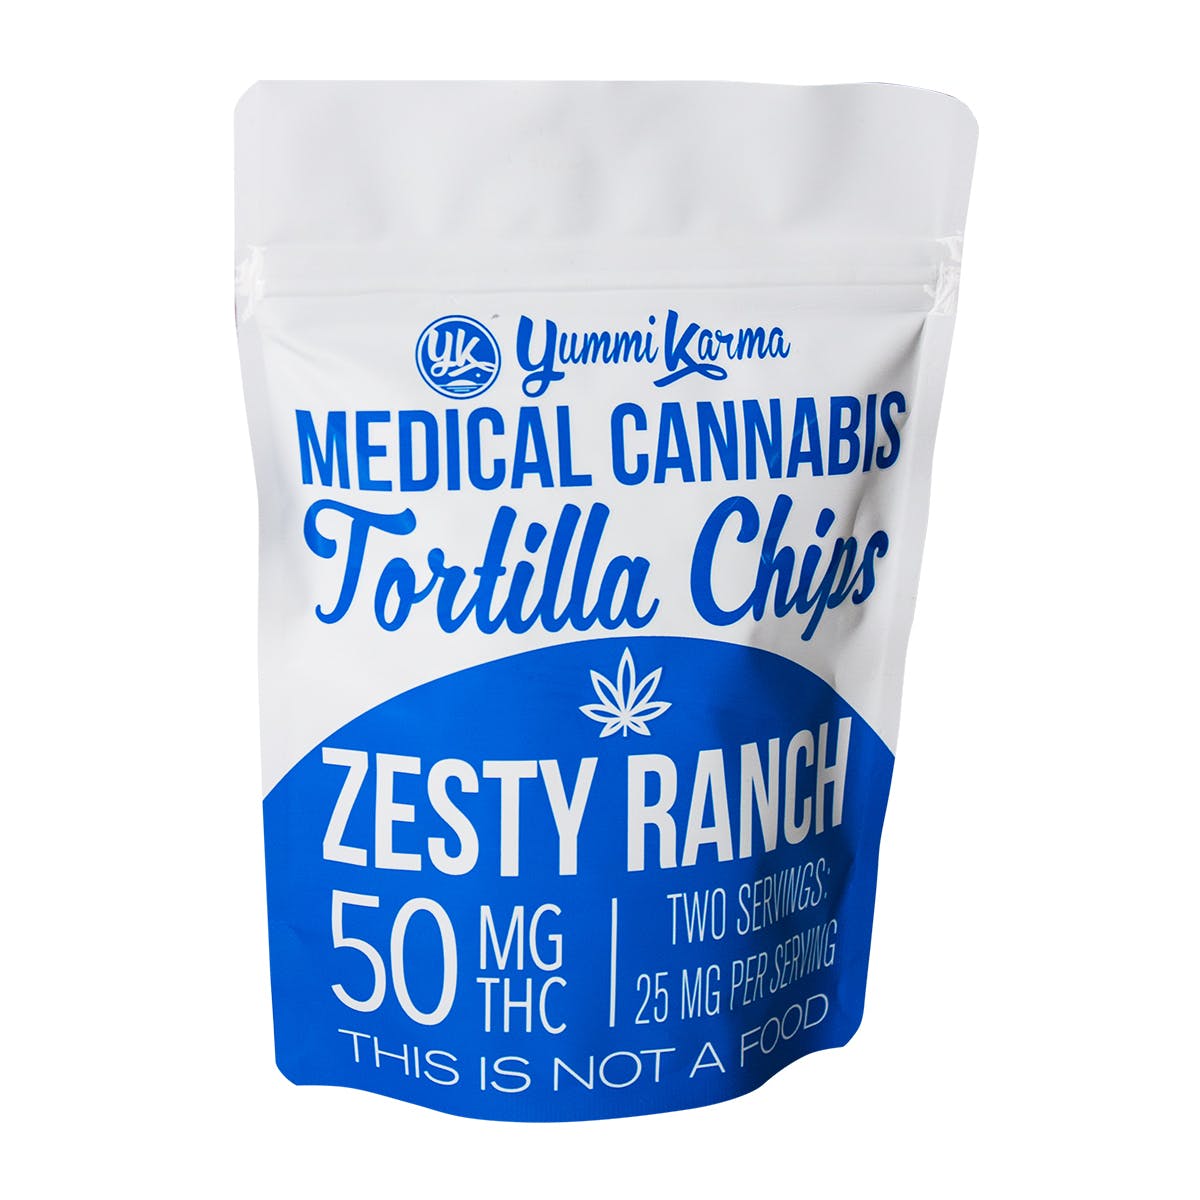 Medical Cannabis Tortilla Chips, Zesty Ranch 50mg